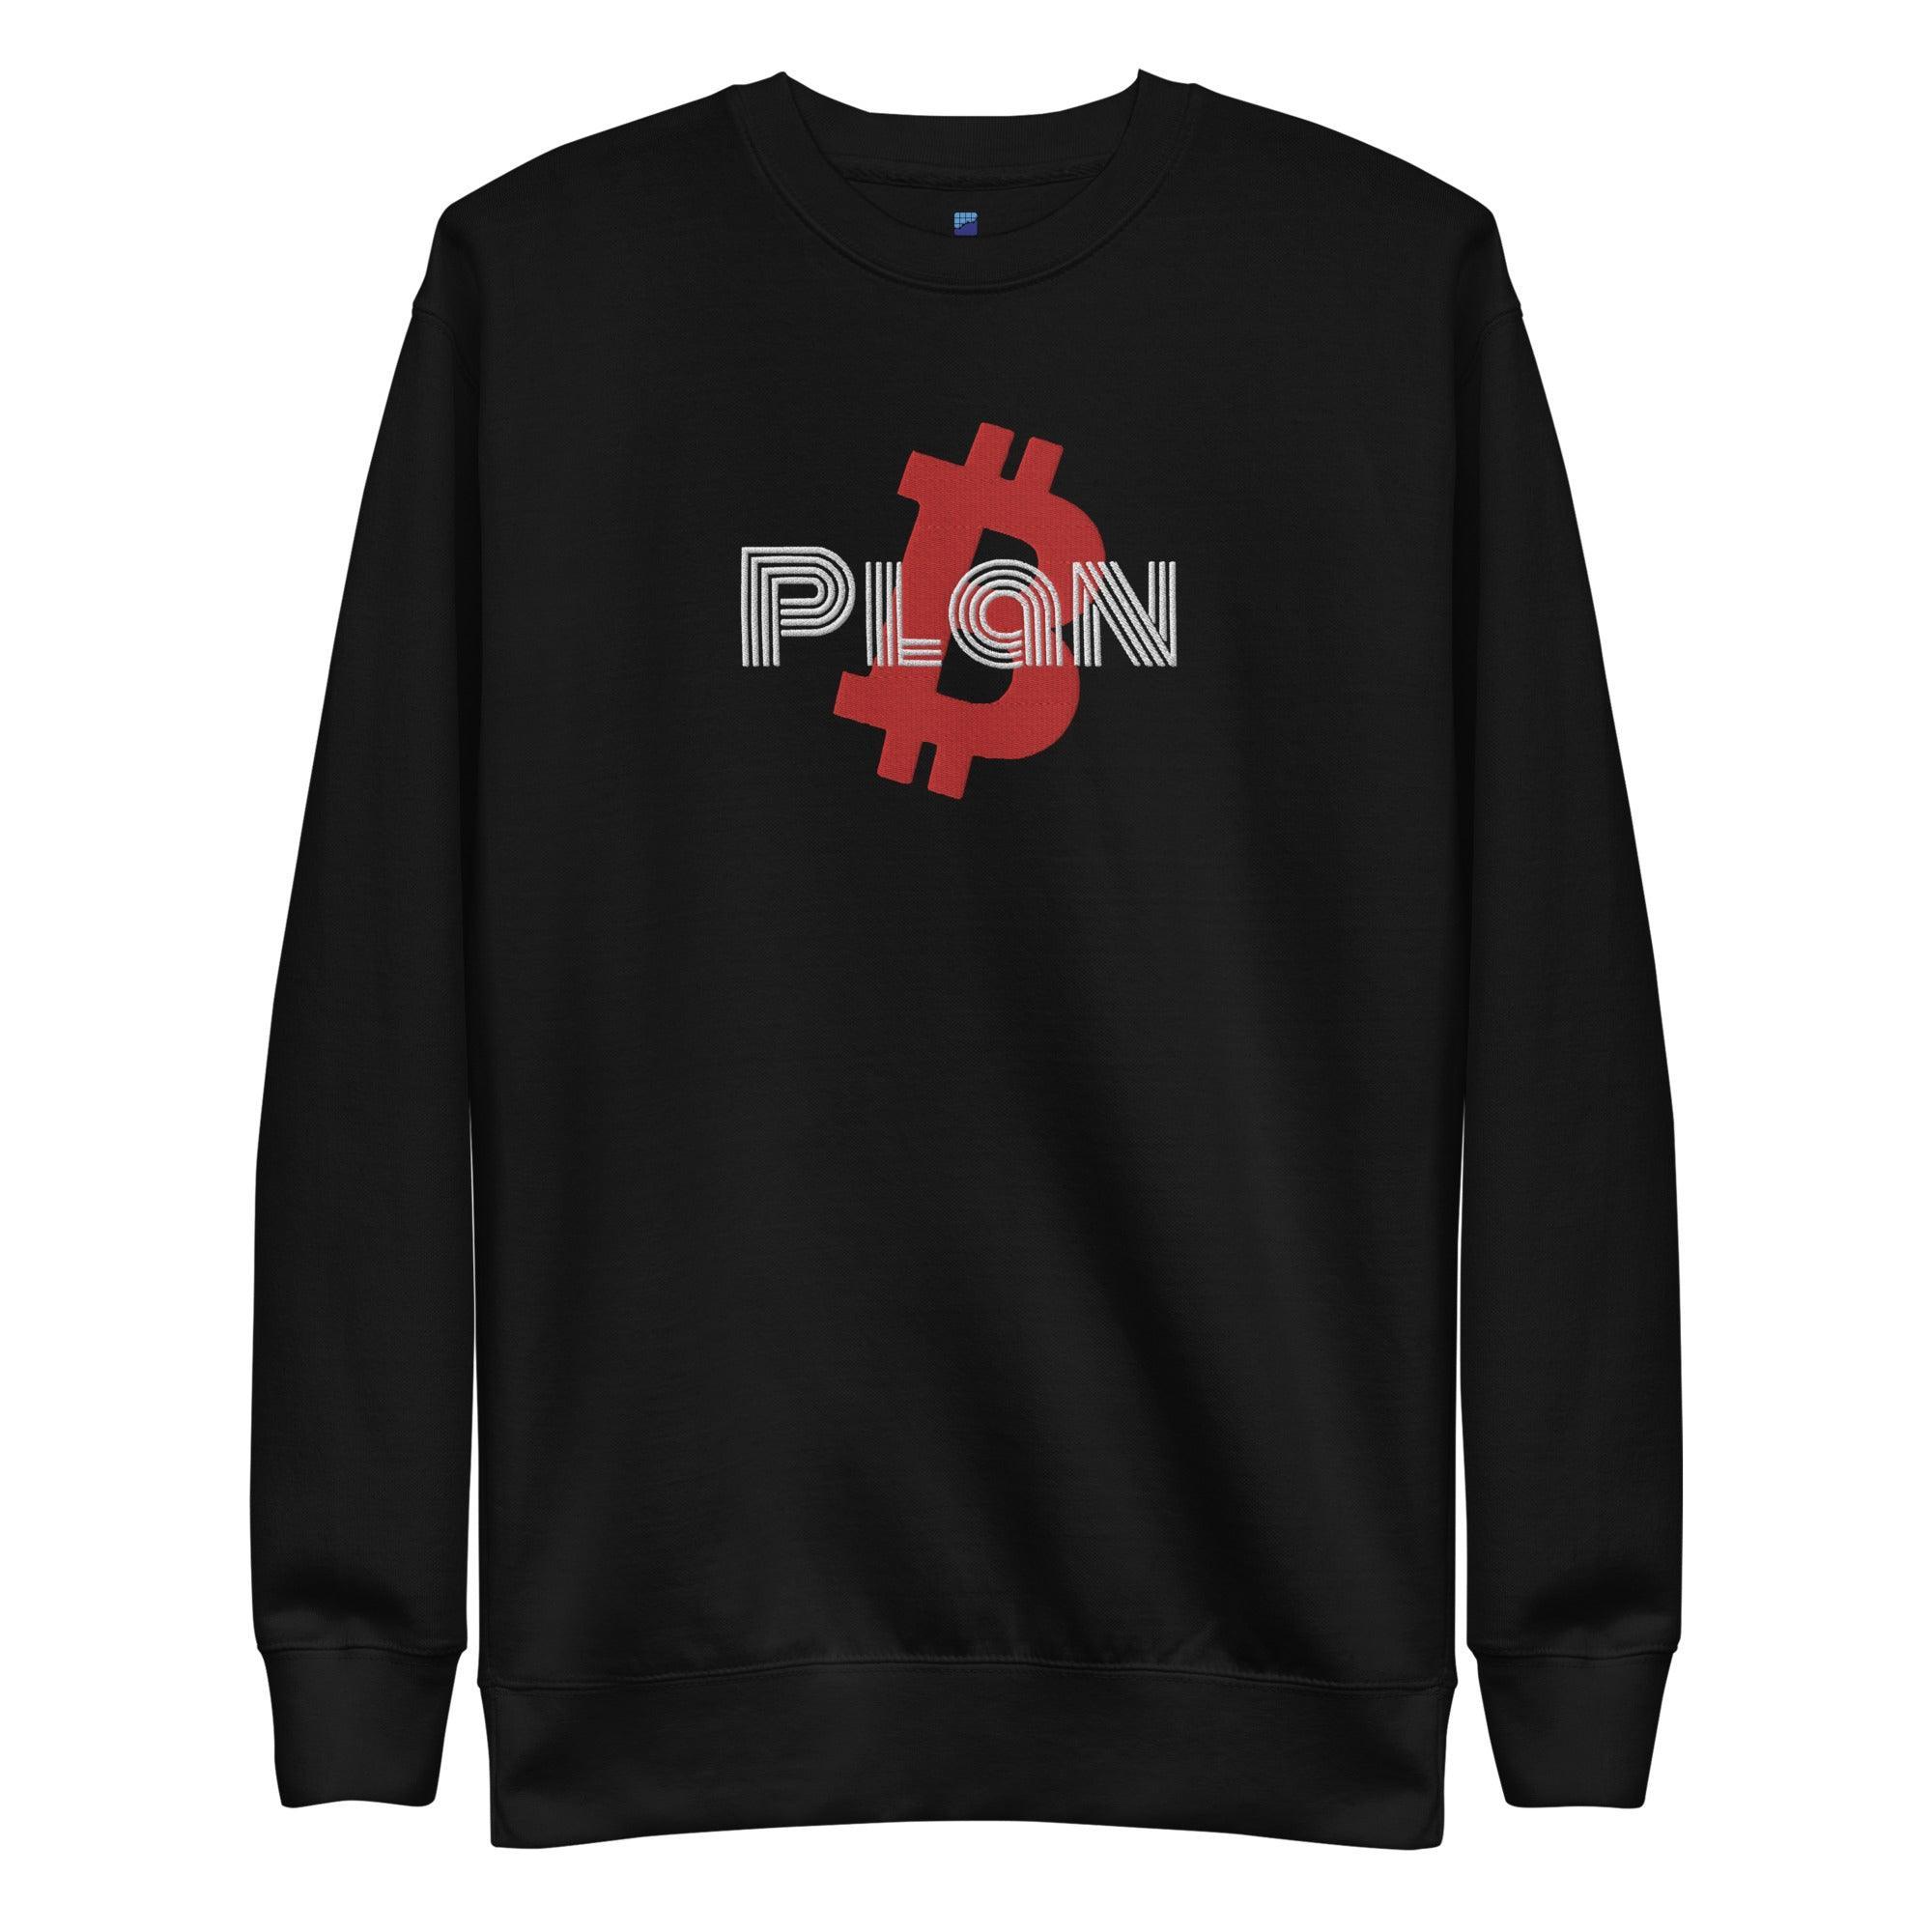 Plan Bitcoin Sweatshirt - InvestmenTees